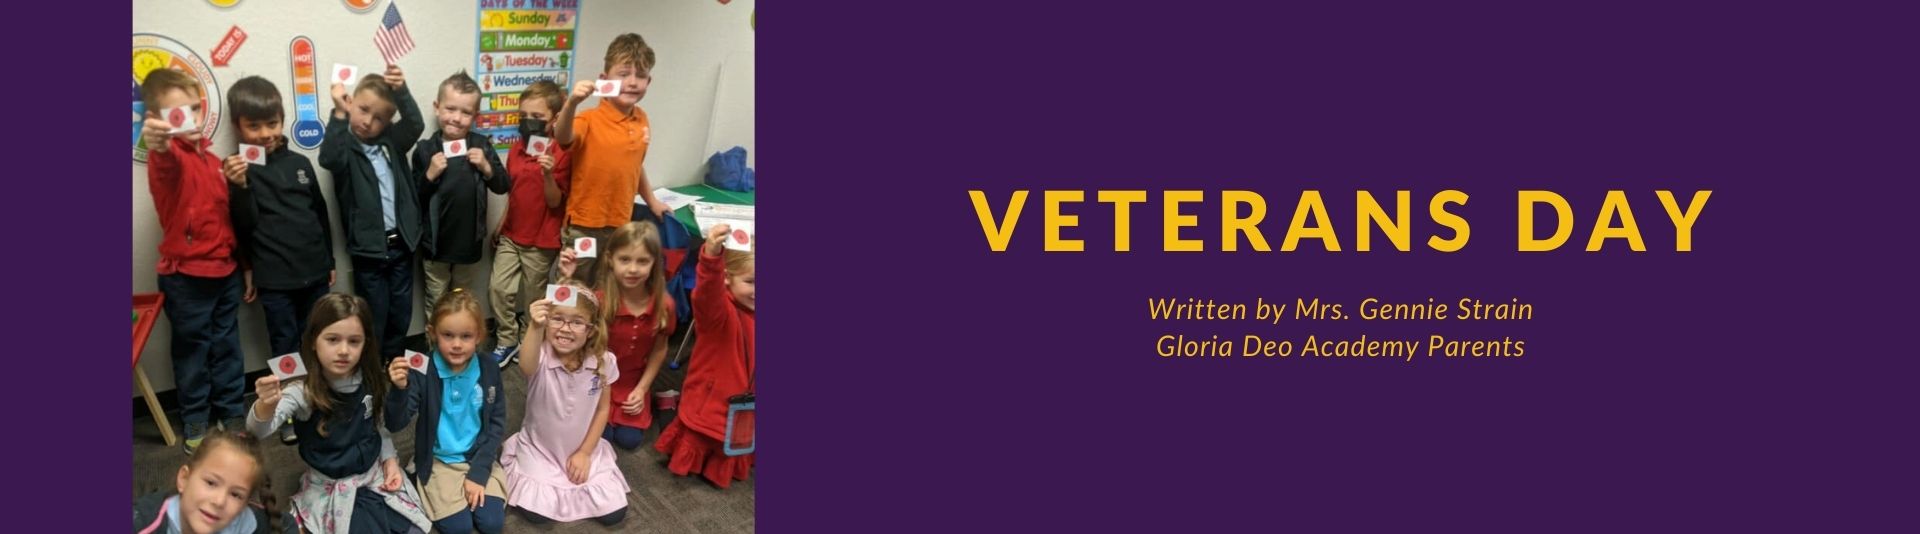 Gloria Deo Academy Veterans Day